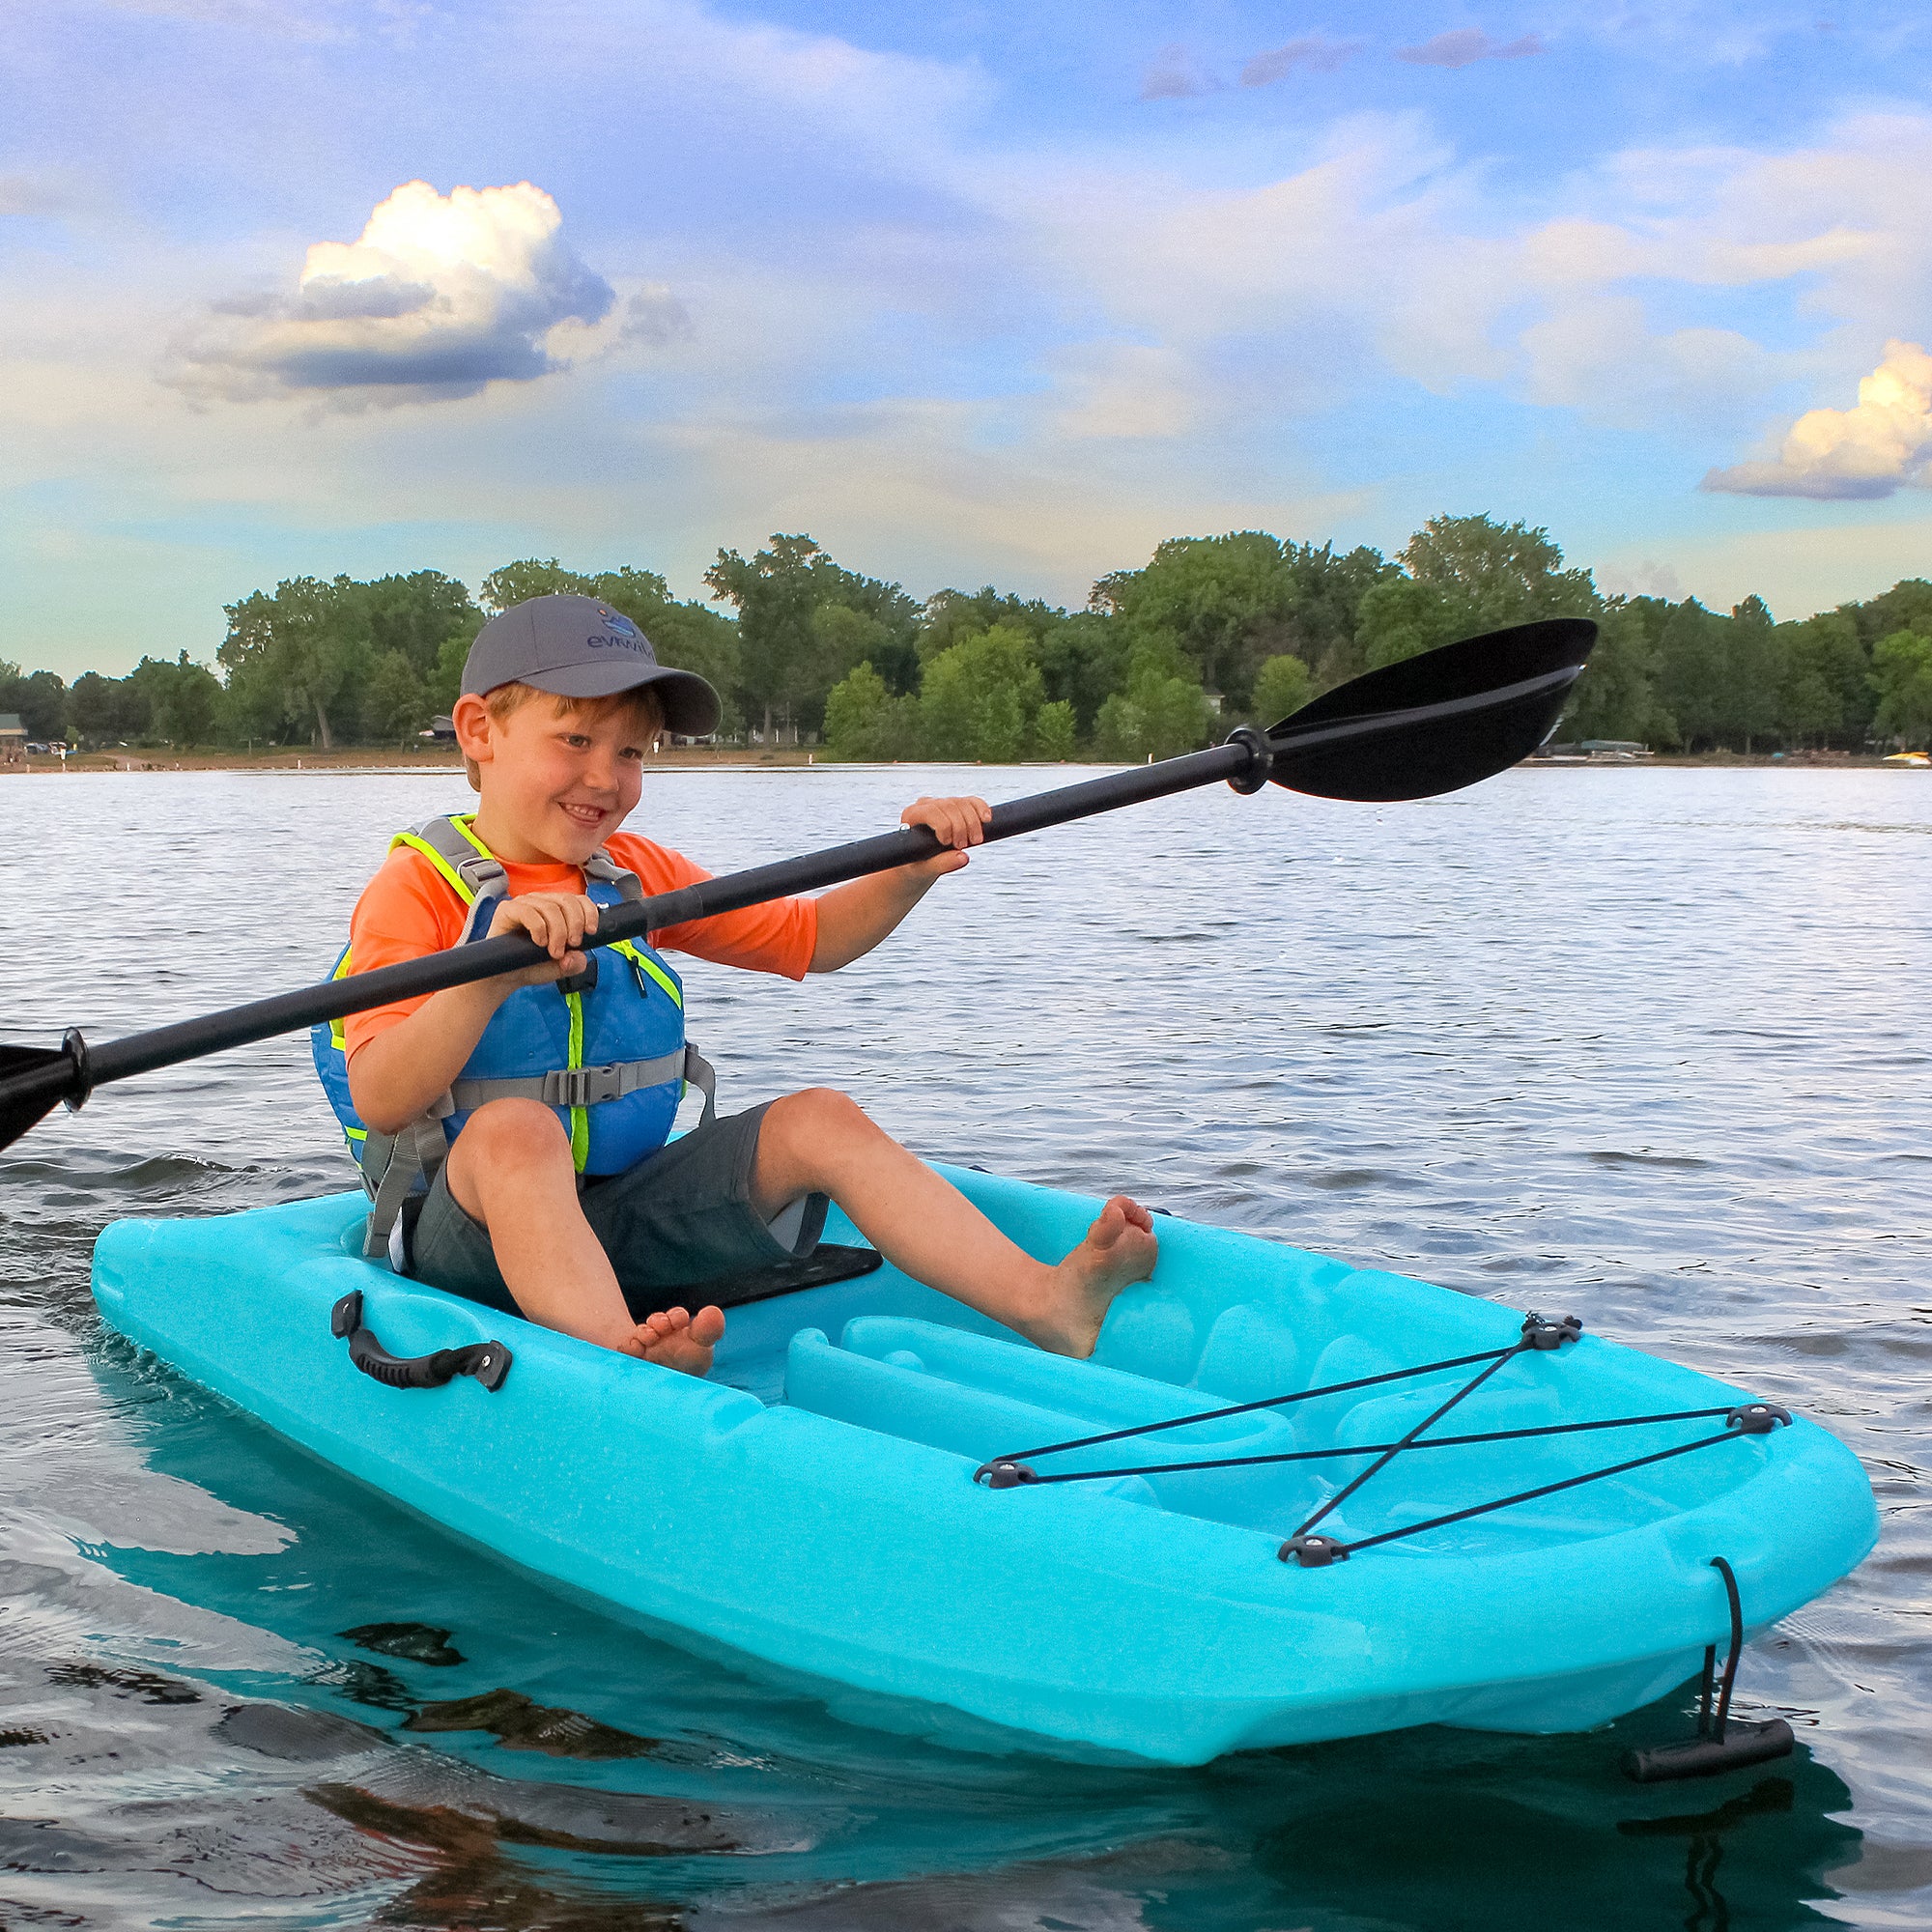 Evrwild Premium Kids' Kayak - Blue - Paddle Included